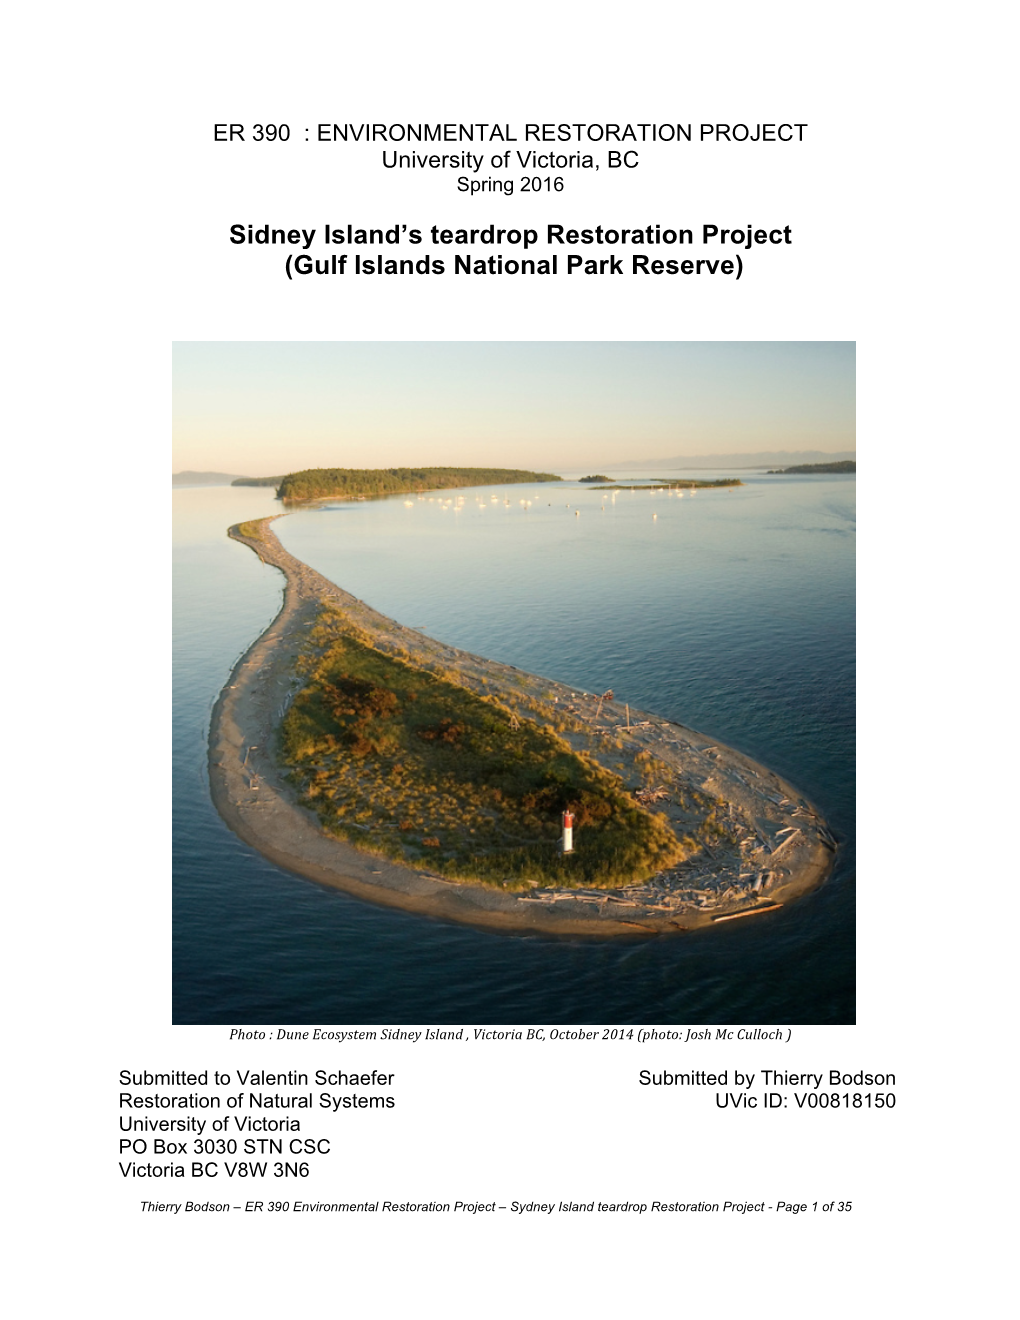 Sidney Island's Teardrop Restoration Project (Gulf Islands National Park